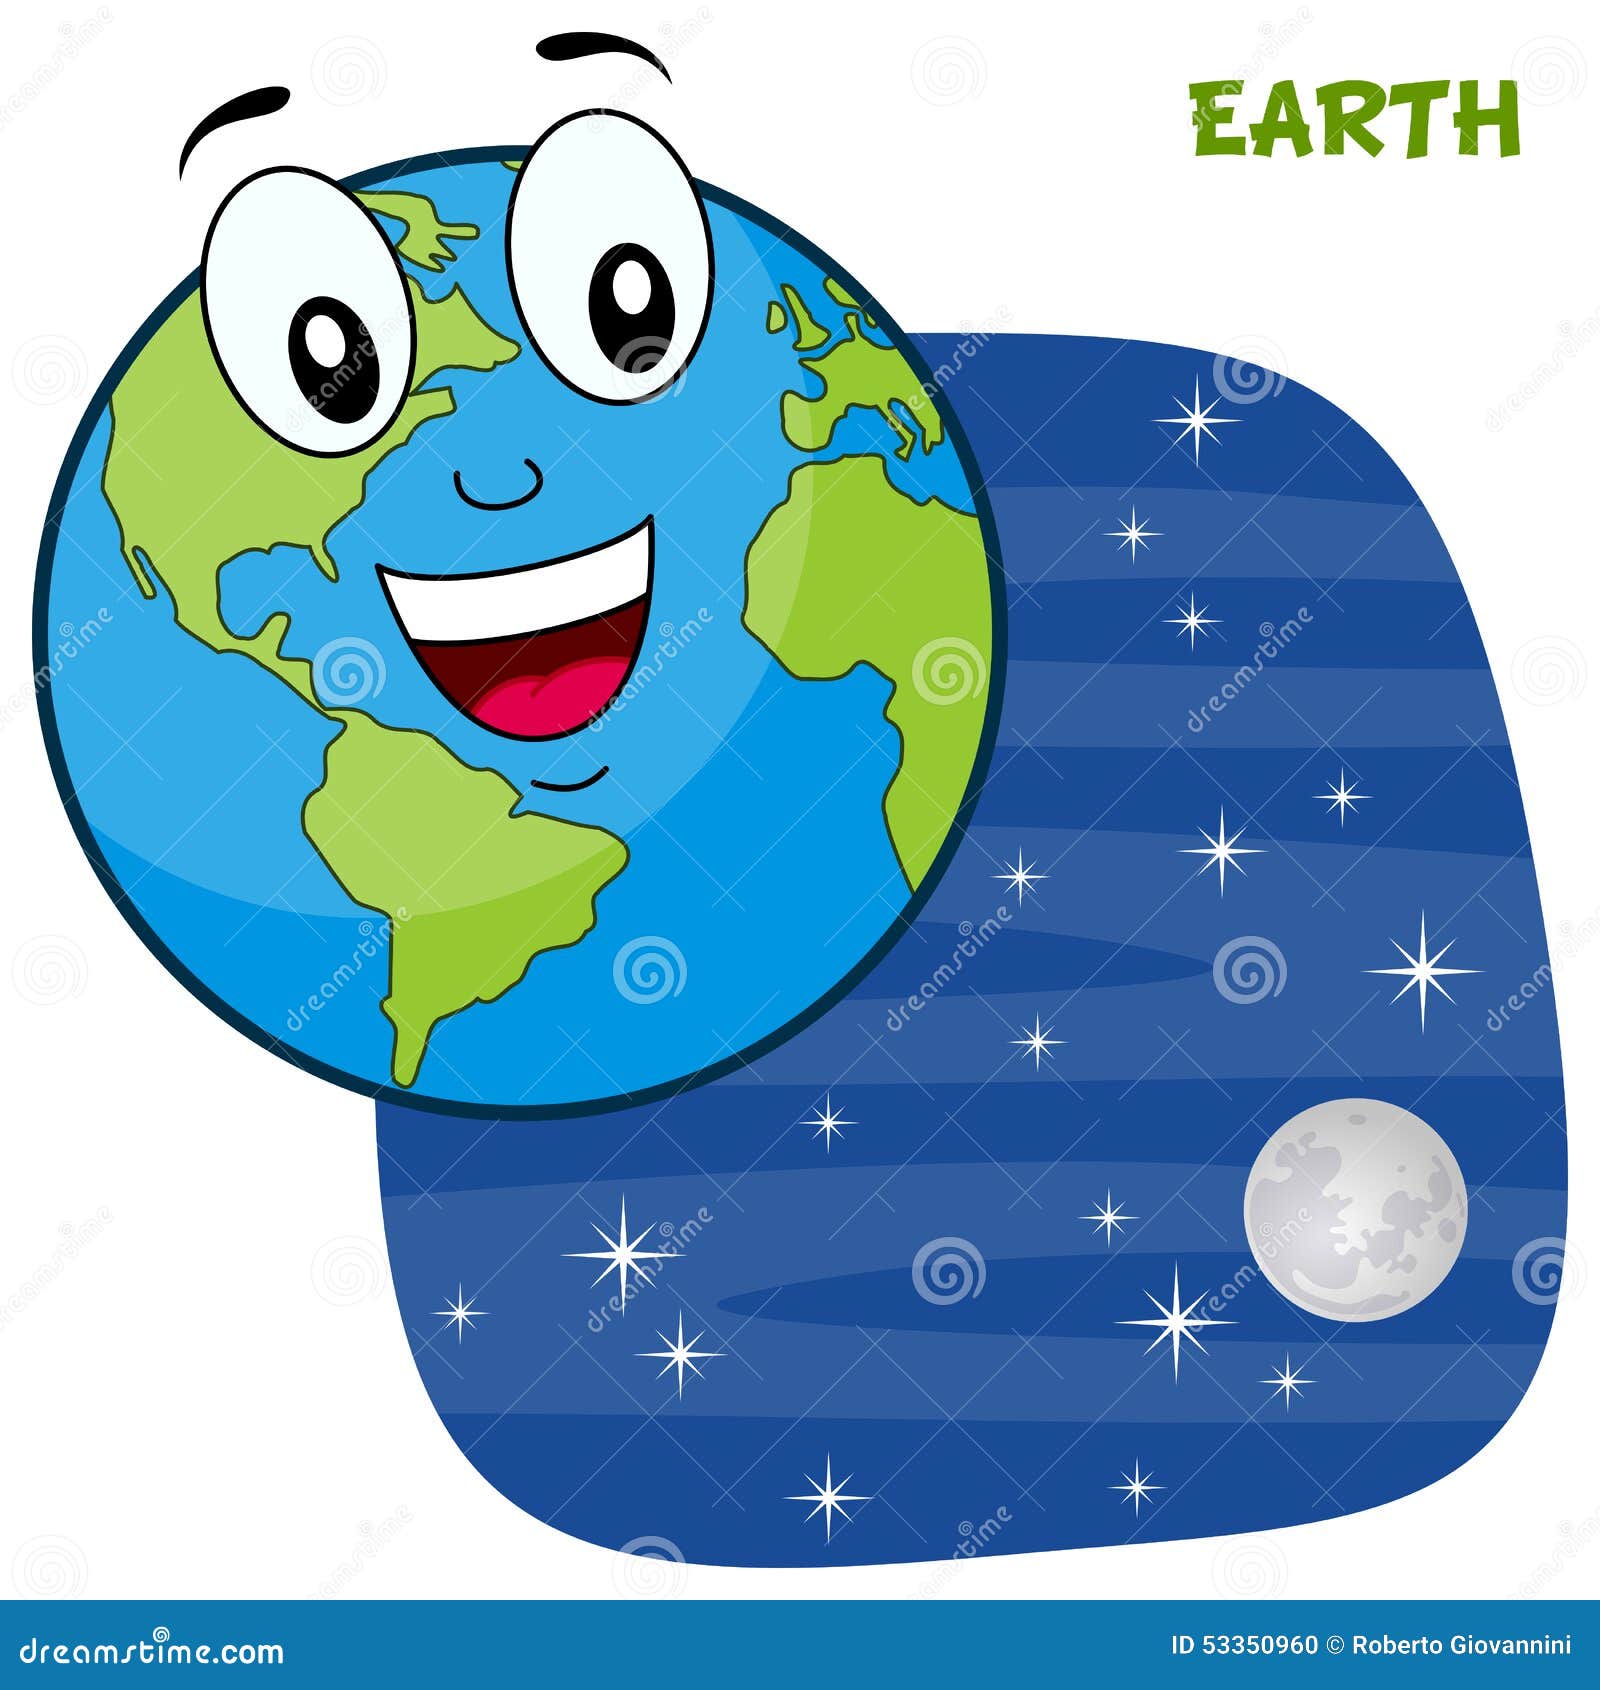 Cartoon Earth Planet Character